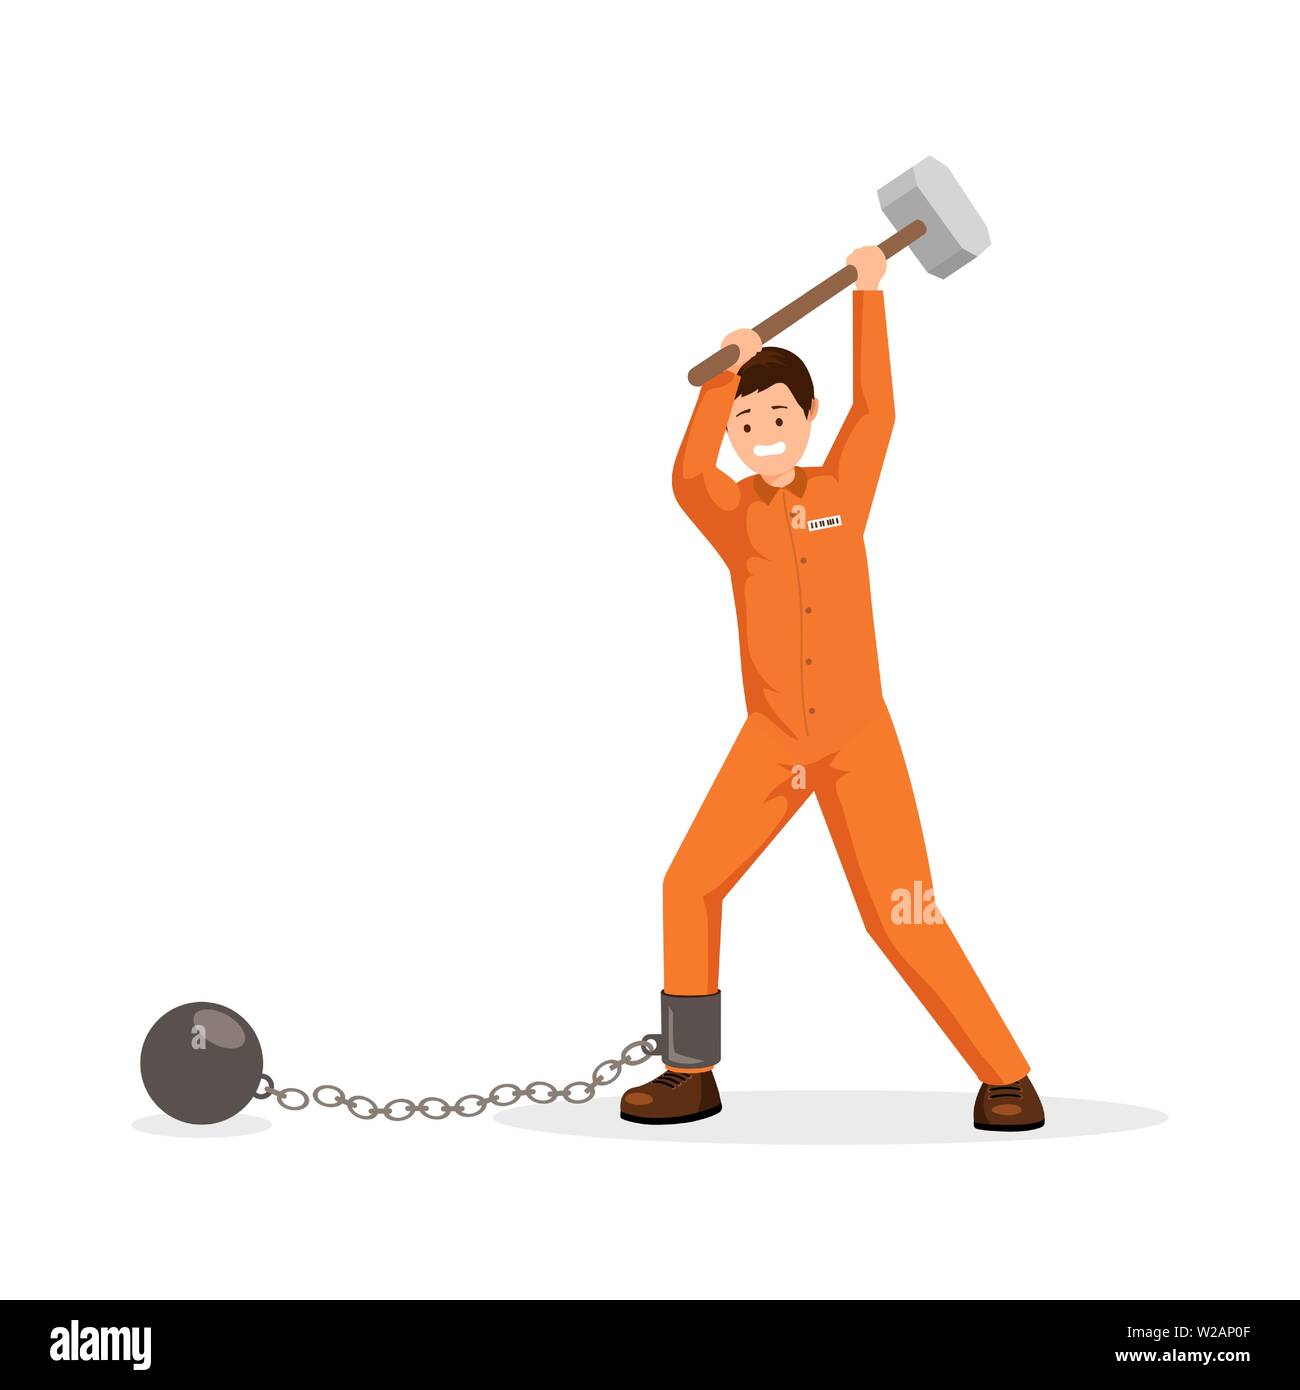 Convict breaking chain flat vector illustration. Man in prison uniform holding huge sledge hammer, trying to break chain with ball. Avoiding responsibility burden, mental pressure metaphor Stock Vector